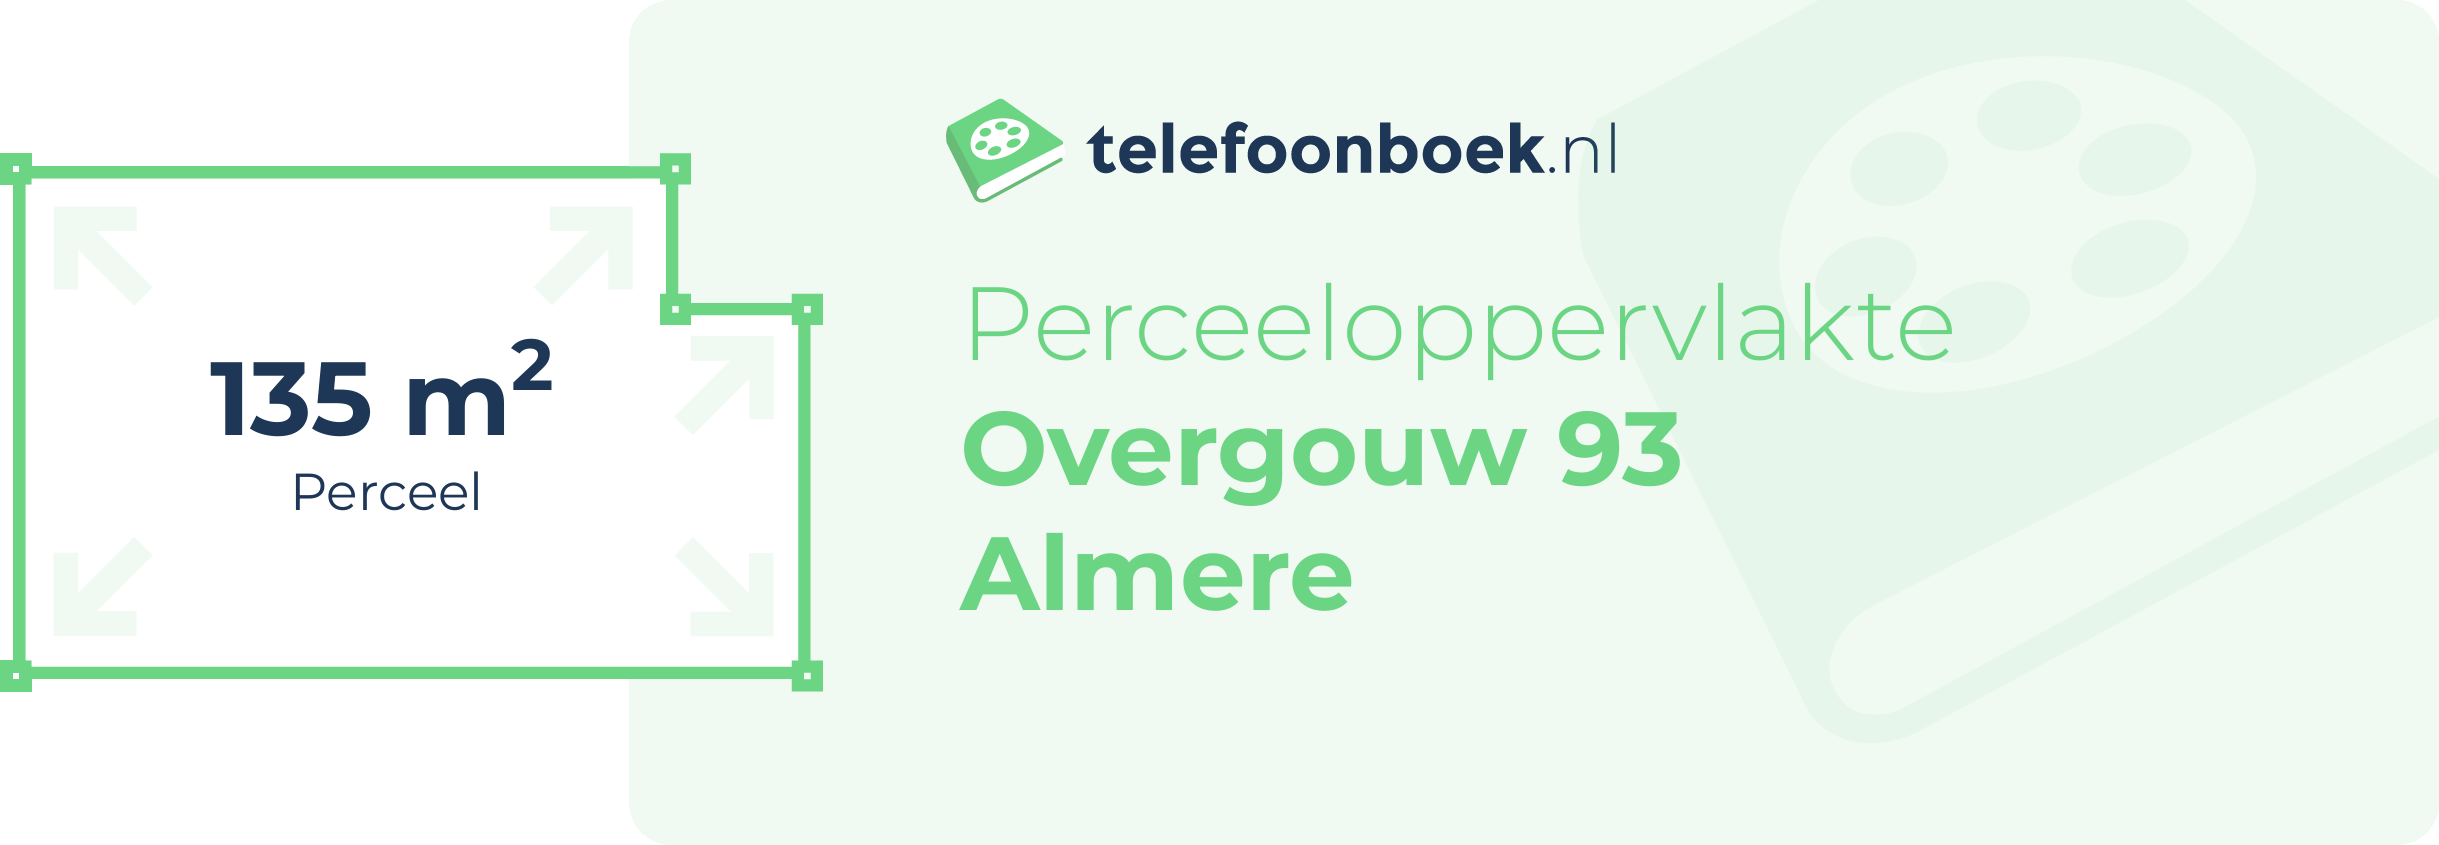 Perceeloppervlakte Overgouw 93 Almere